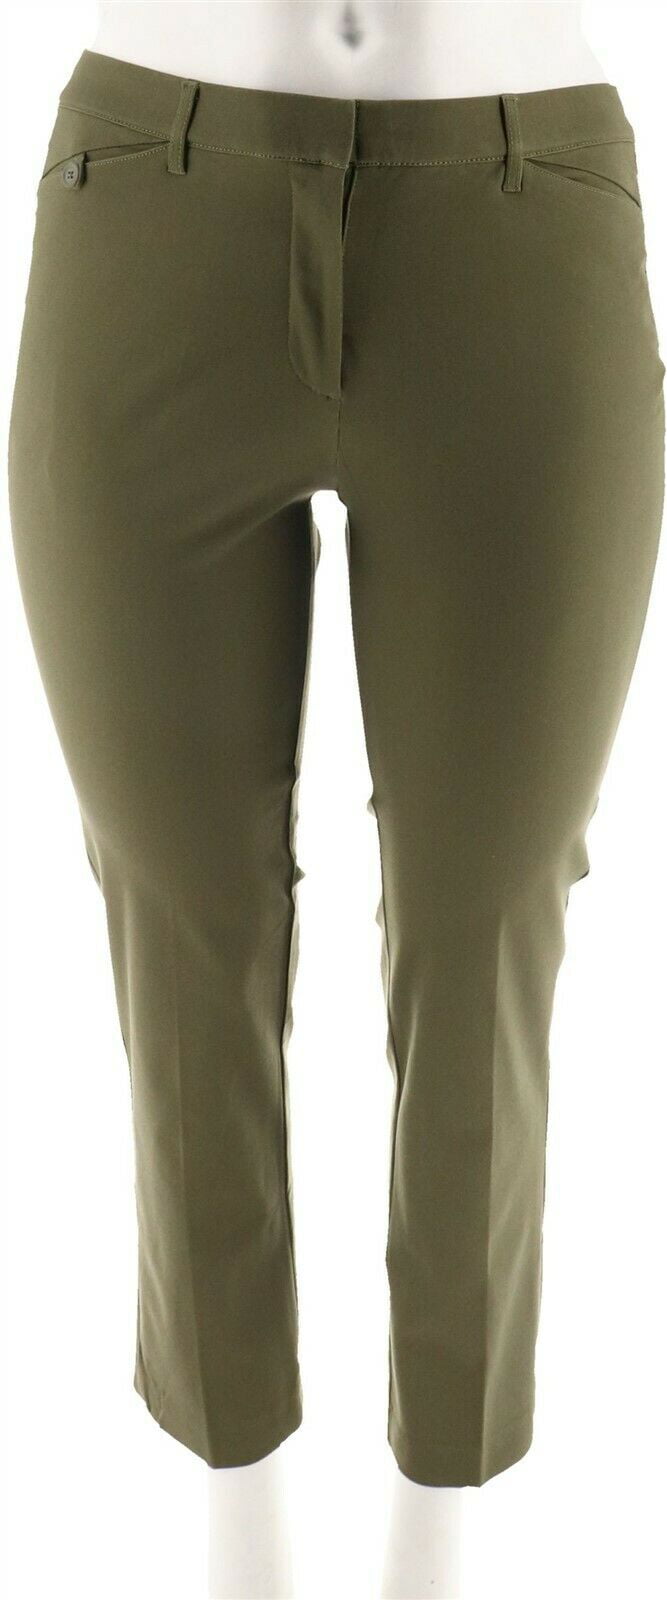 Isaac Mizrahi 24/7 Stretch Straight Leg Pants Bright White 12P NEW A286101